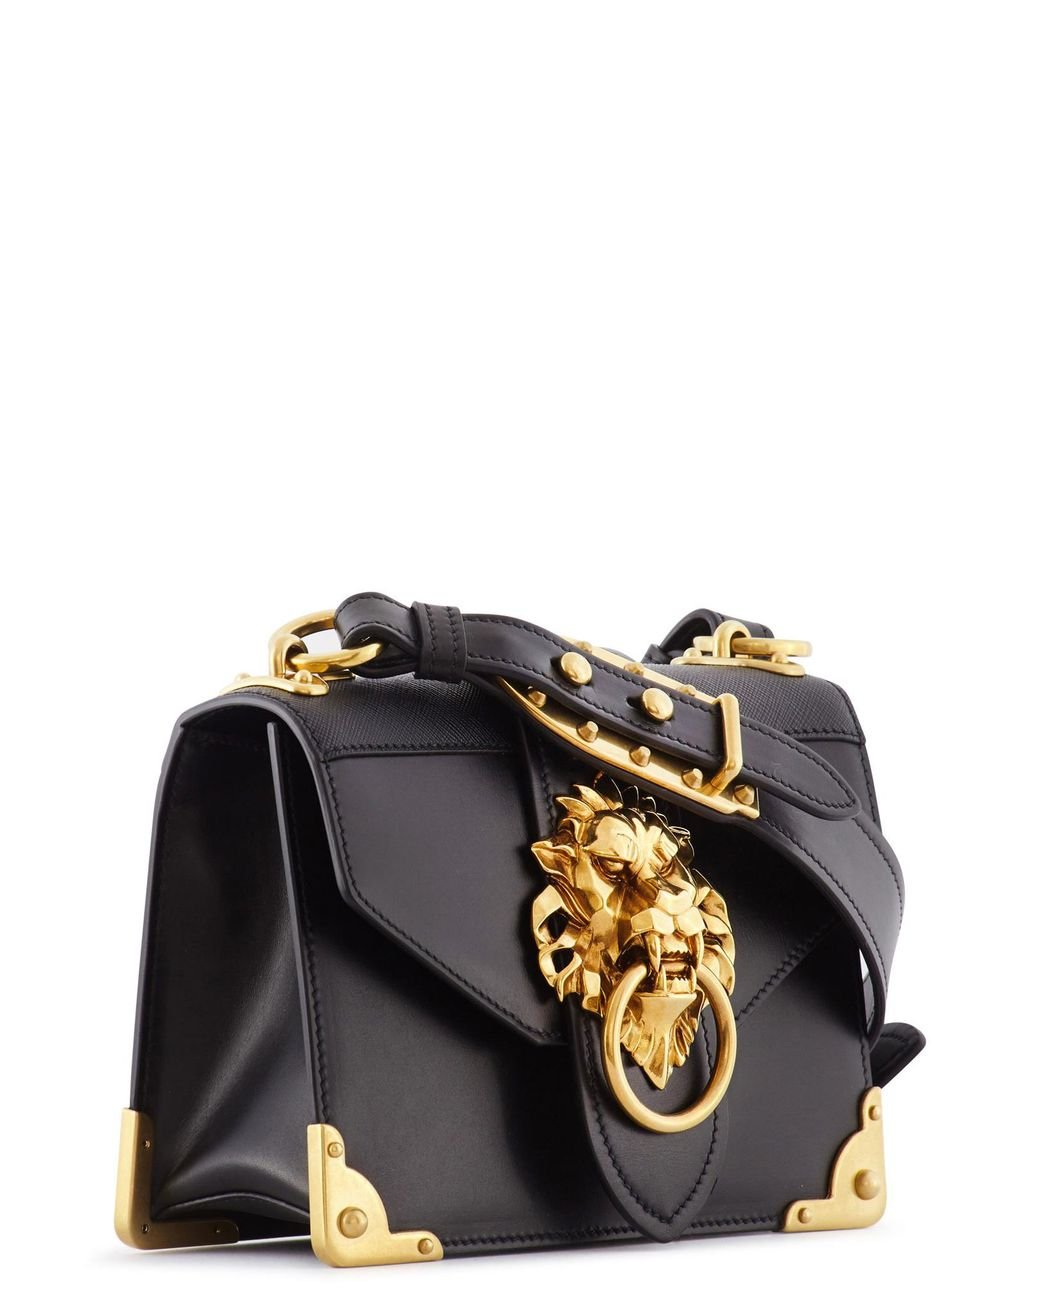 Prada Cahier Lion Head Leather Bag in Black | Lyst